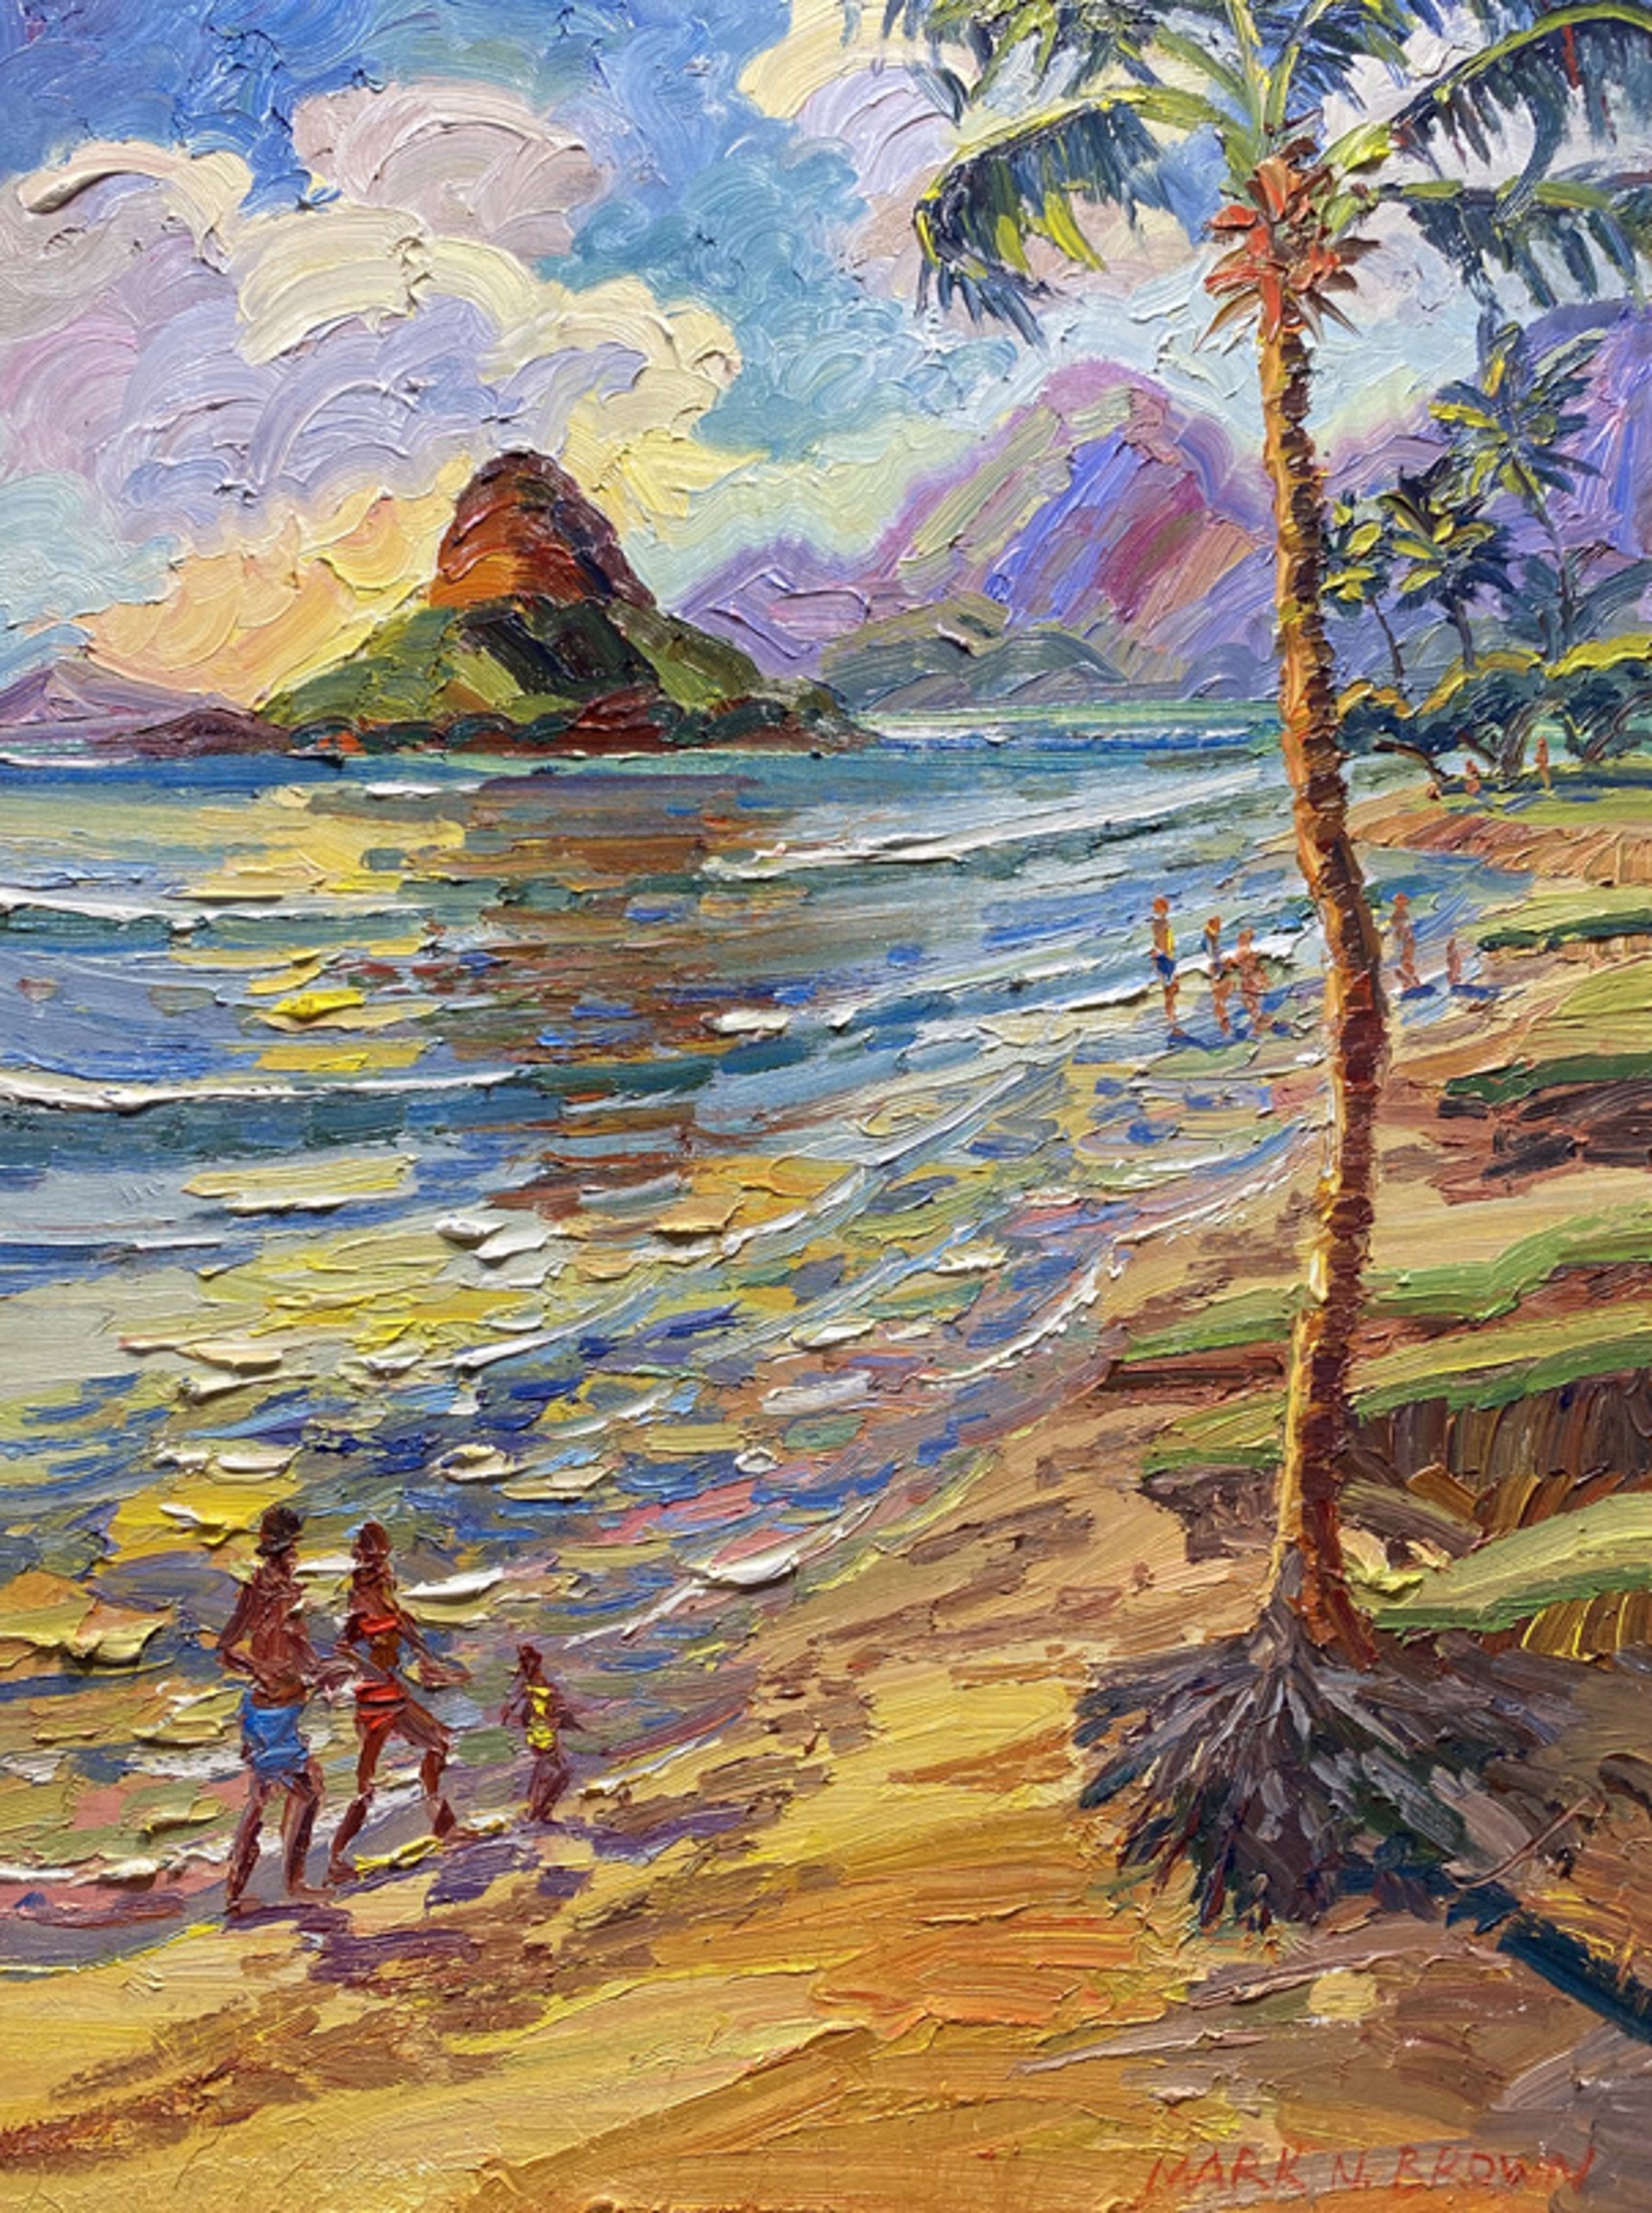 Mokoliʻi by Mark Brown